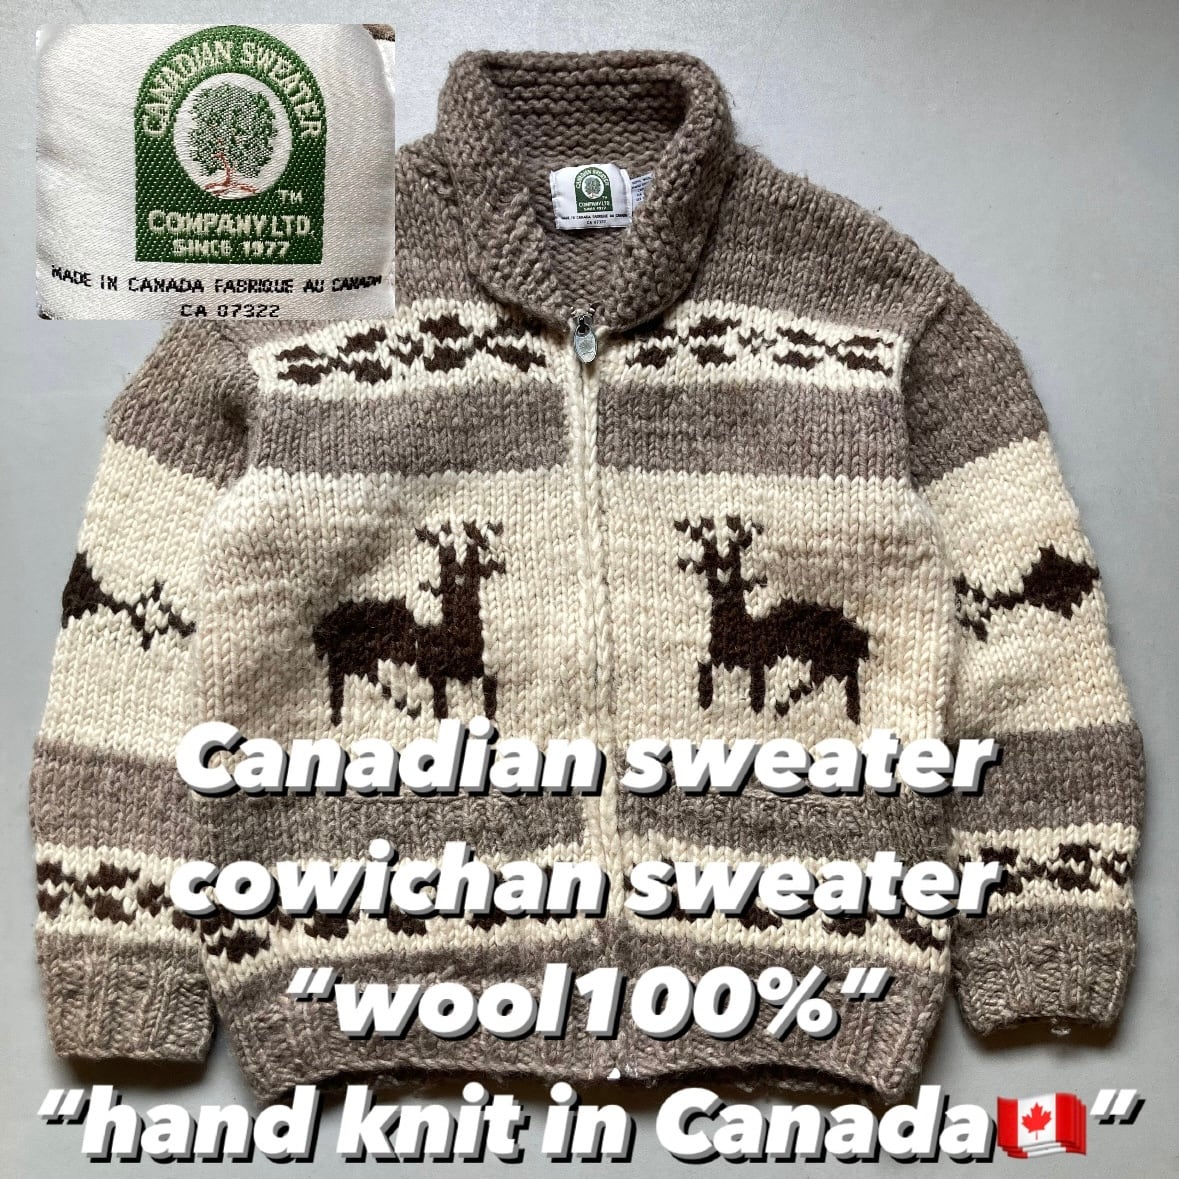 Canadian sweater cowichan sweater “wool100%” “hand knit in Canada”  カナディアンセーター カウチンセーター ハンドニット カナダ製